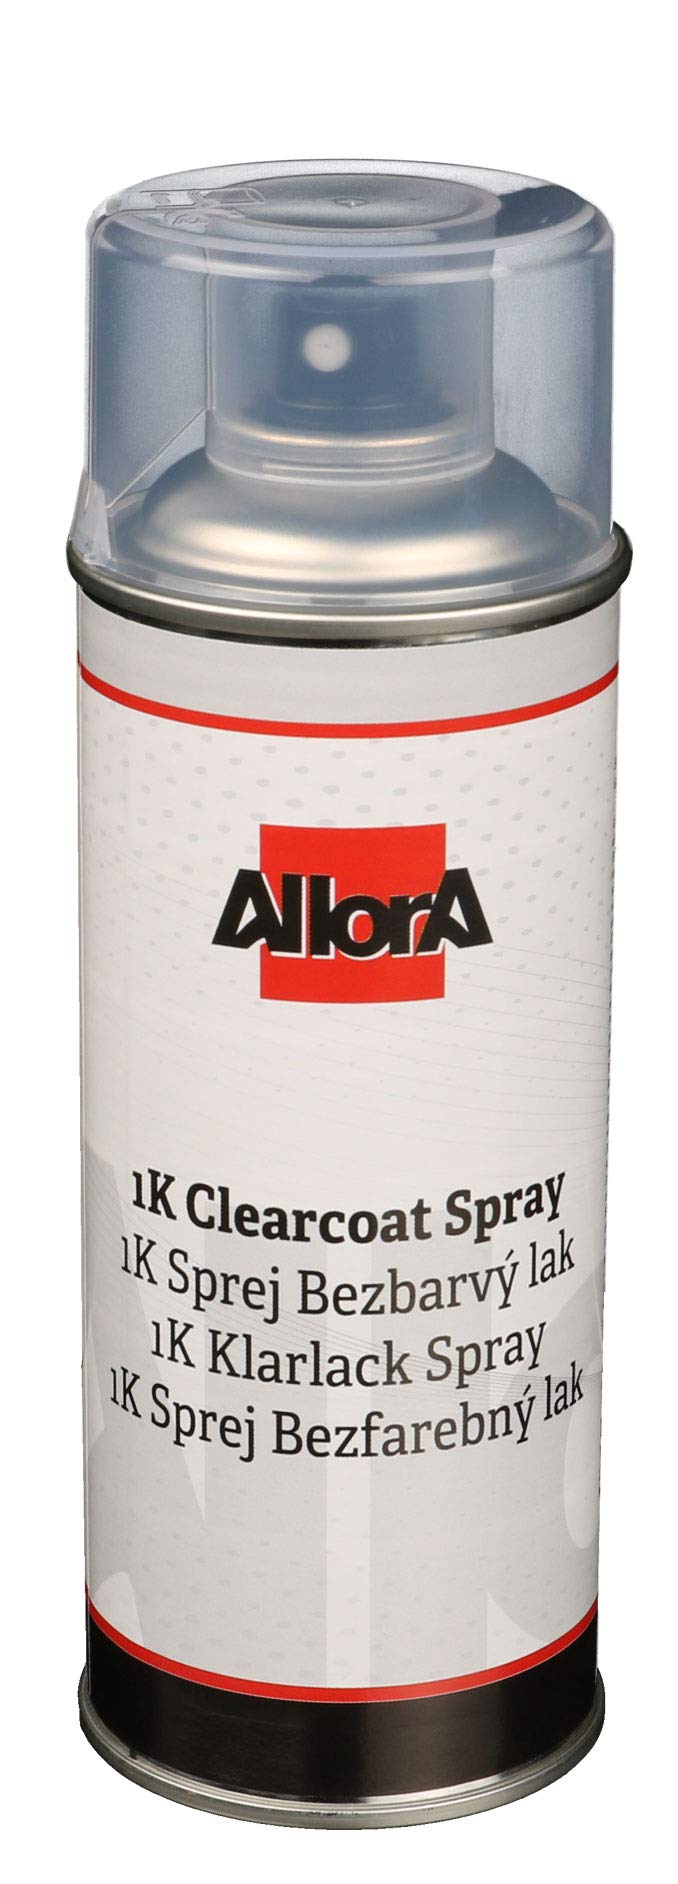 AllorA Profi 1K Klarlack in Spraydose 400ml Klarlackspray farblos von AllorA